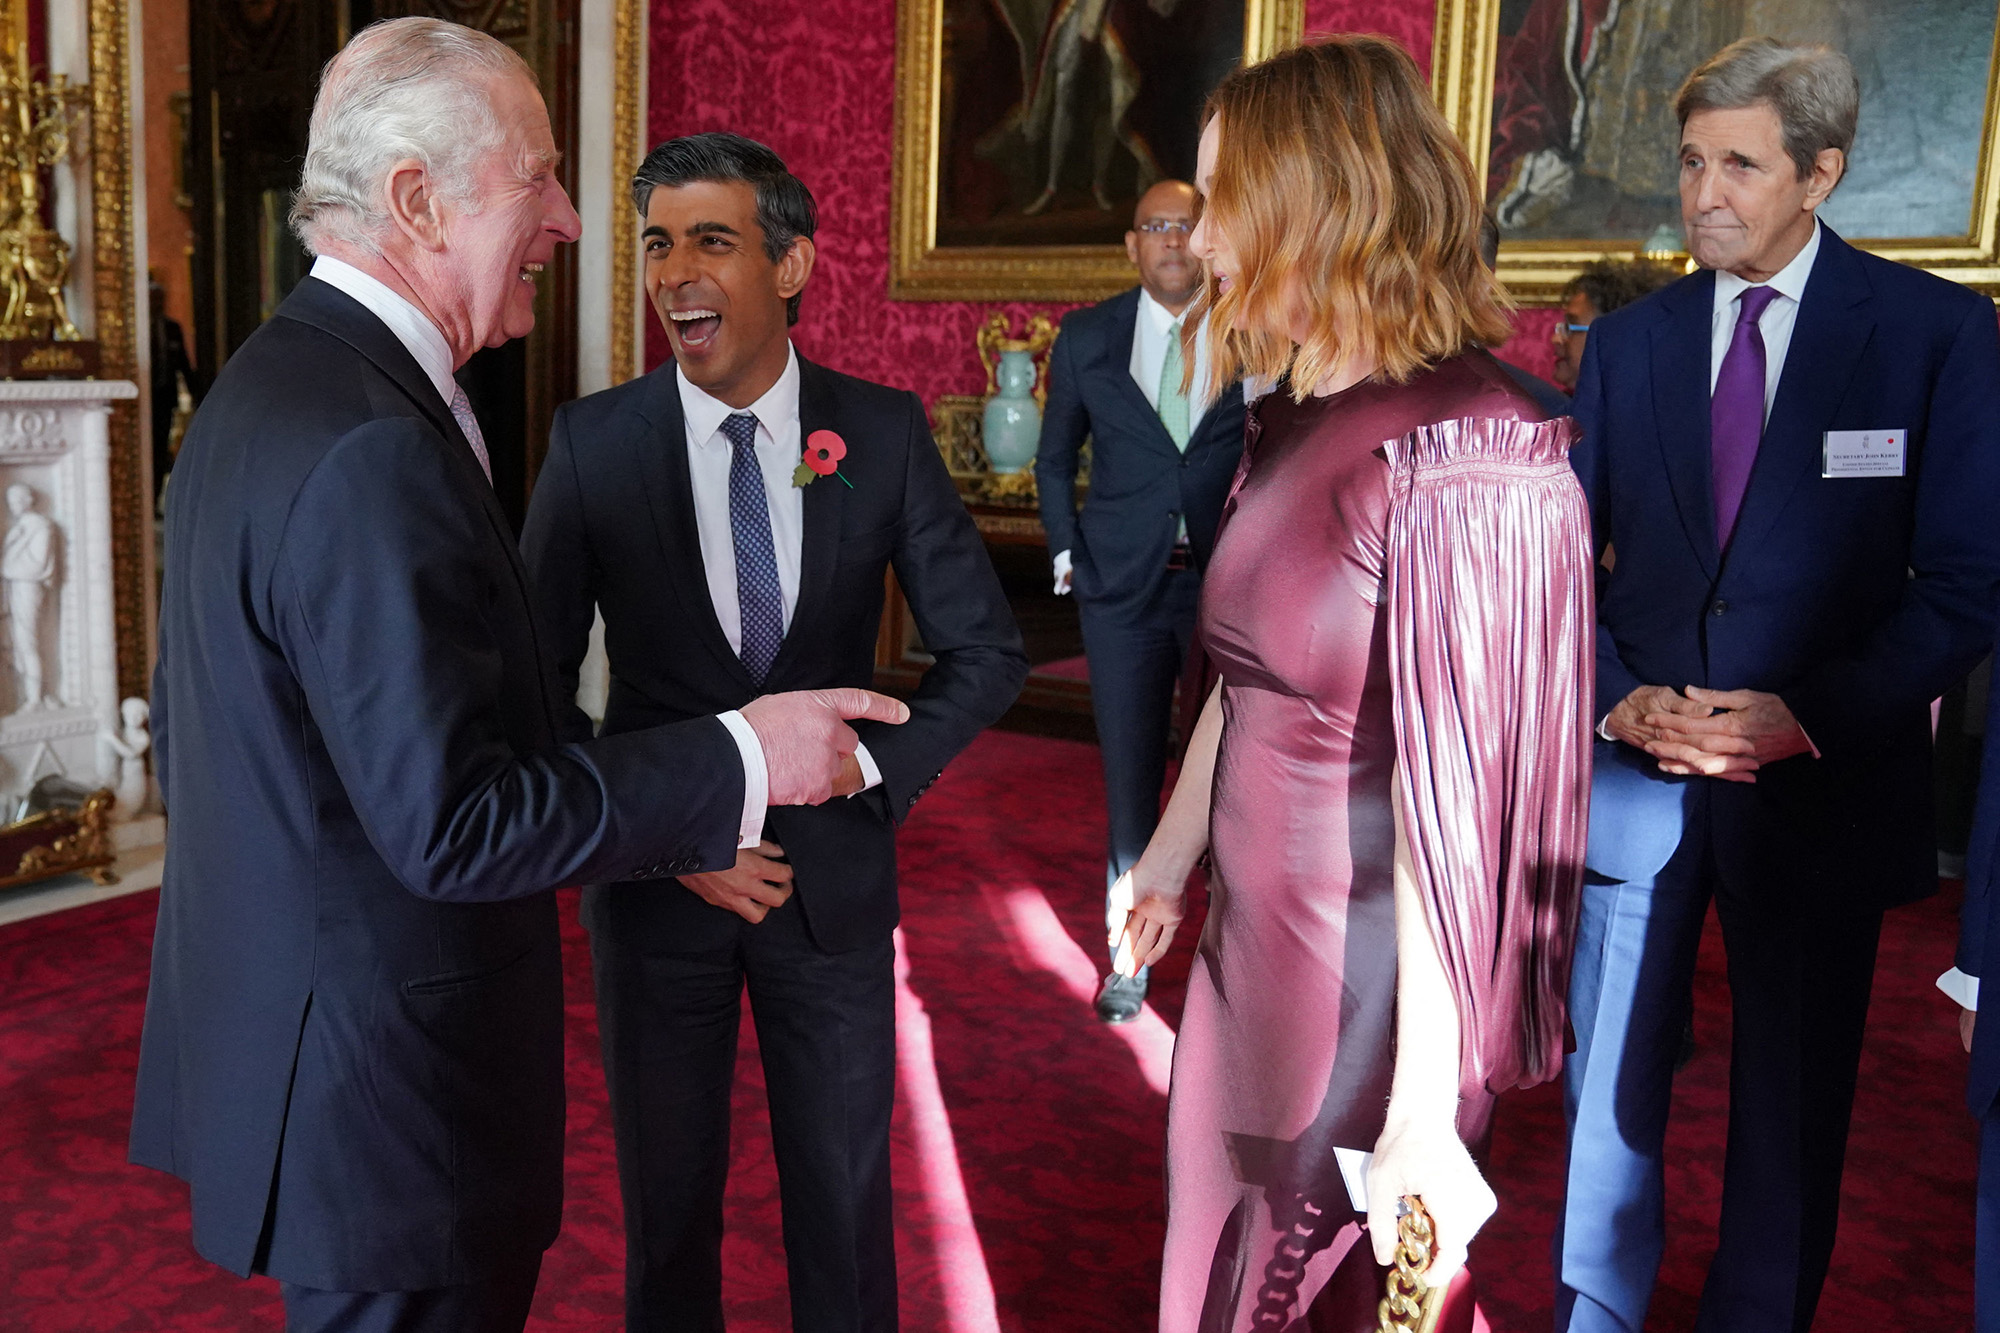 König Charles III. mit Premier Rishi Sunak, Stella McCartney und John Kerry